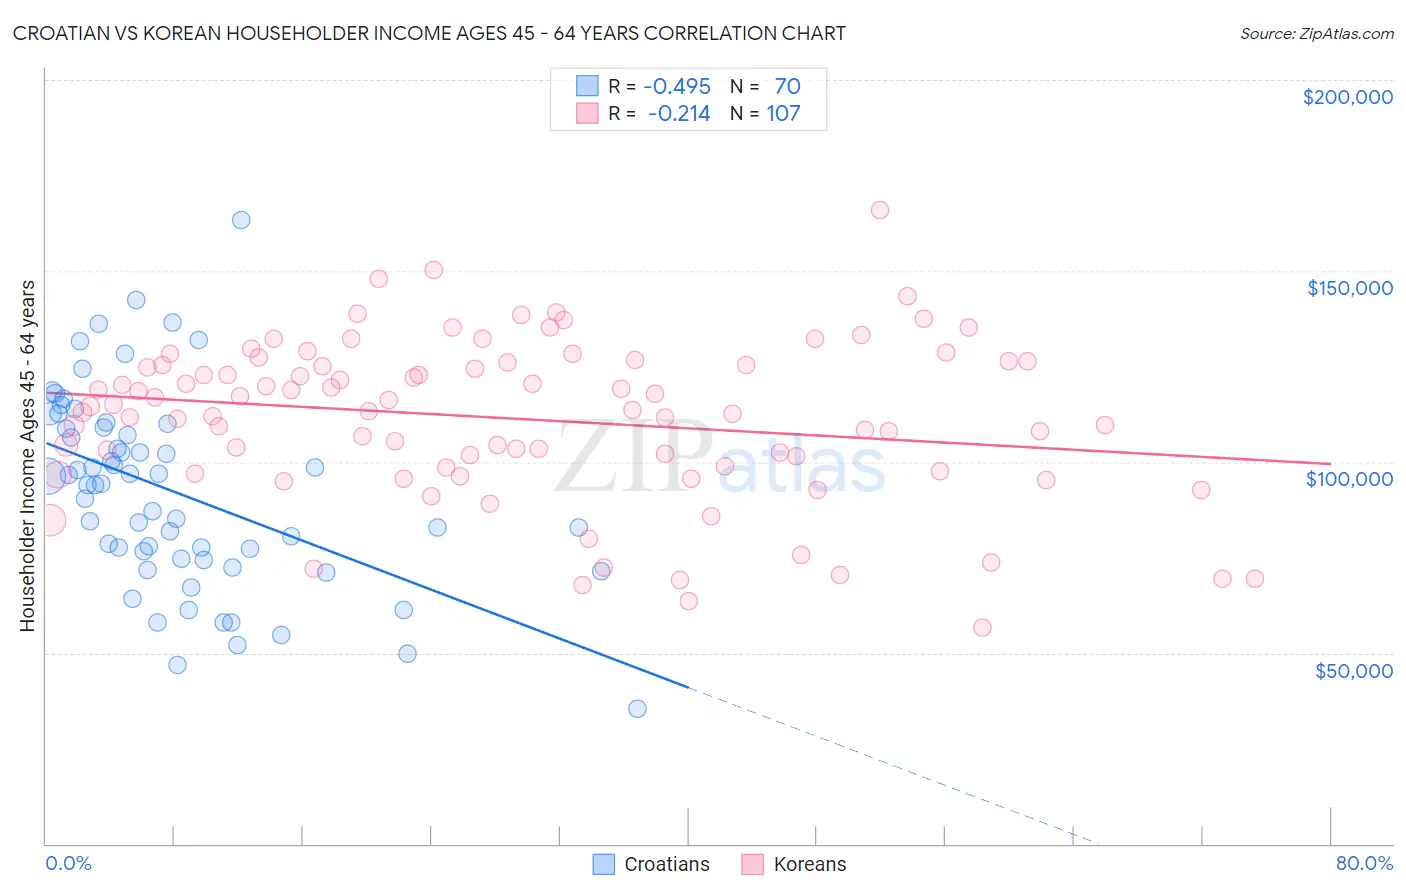 Croatian vs Korean Householder Income Ages 45 - 64 years